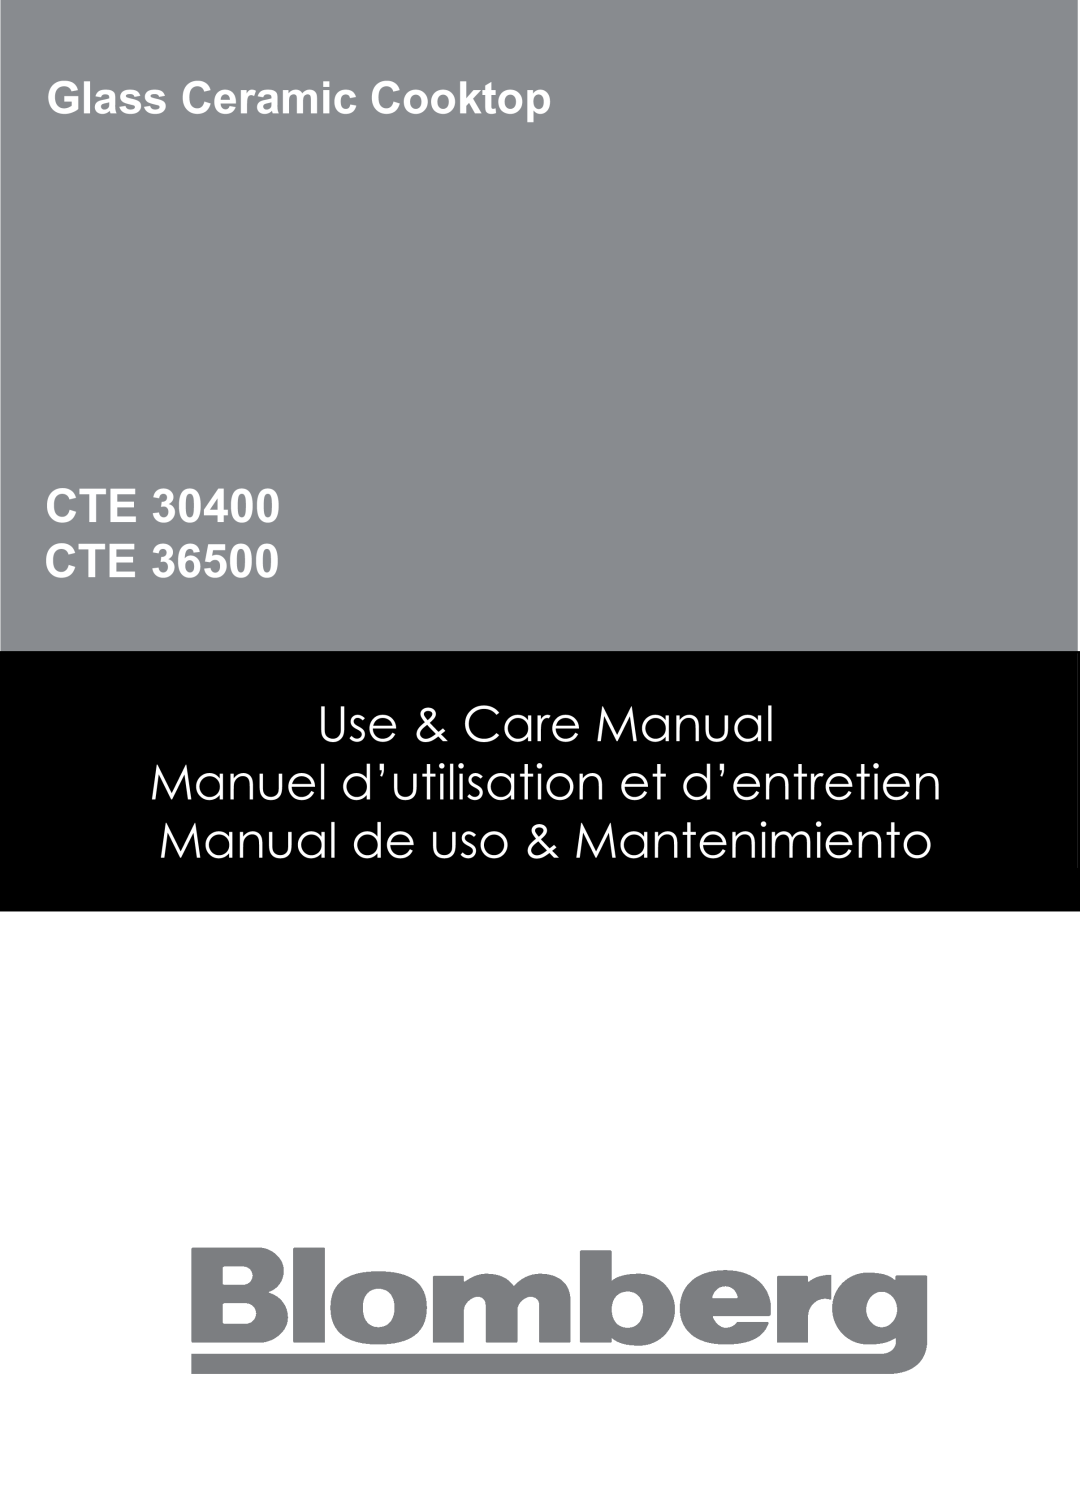 Blomberg CTE 30400, CTE 36500 manuel dutilisation Use & Care Manual, Cte Cte, Glass Ceramic Cooktop 